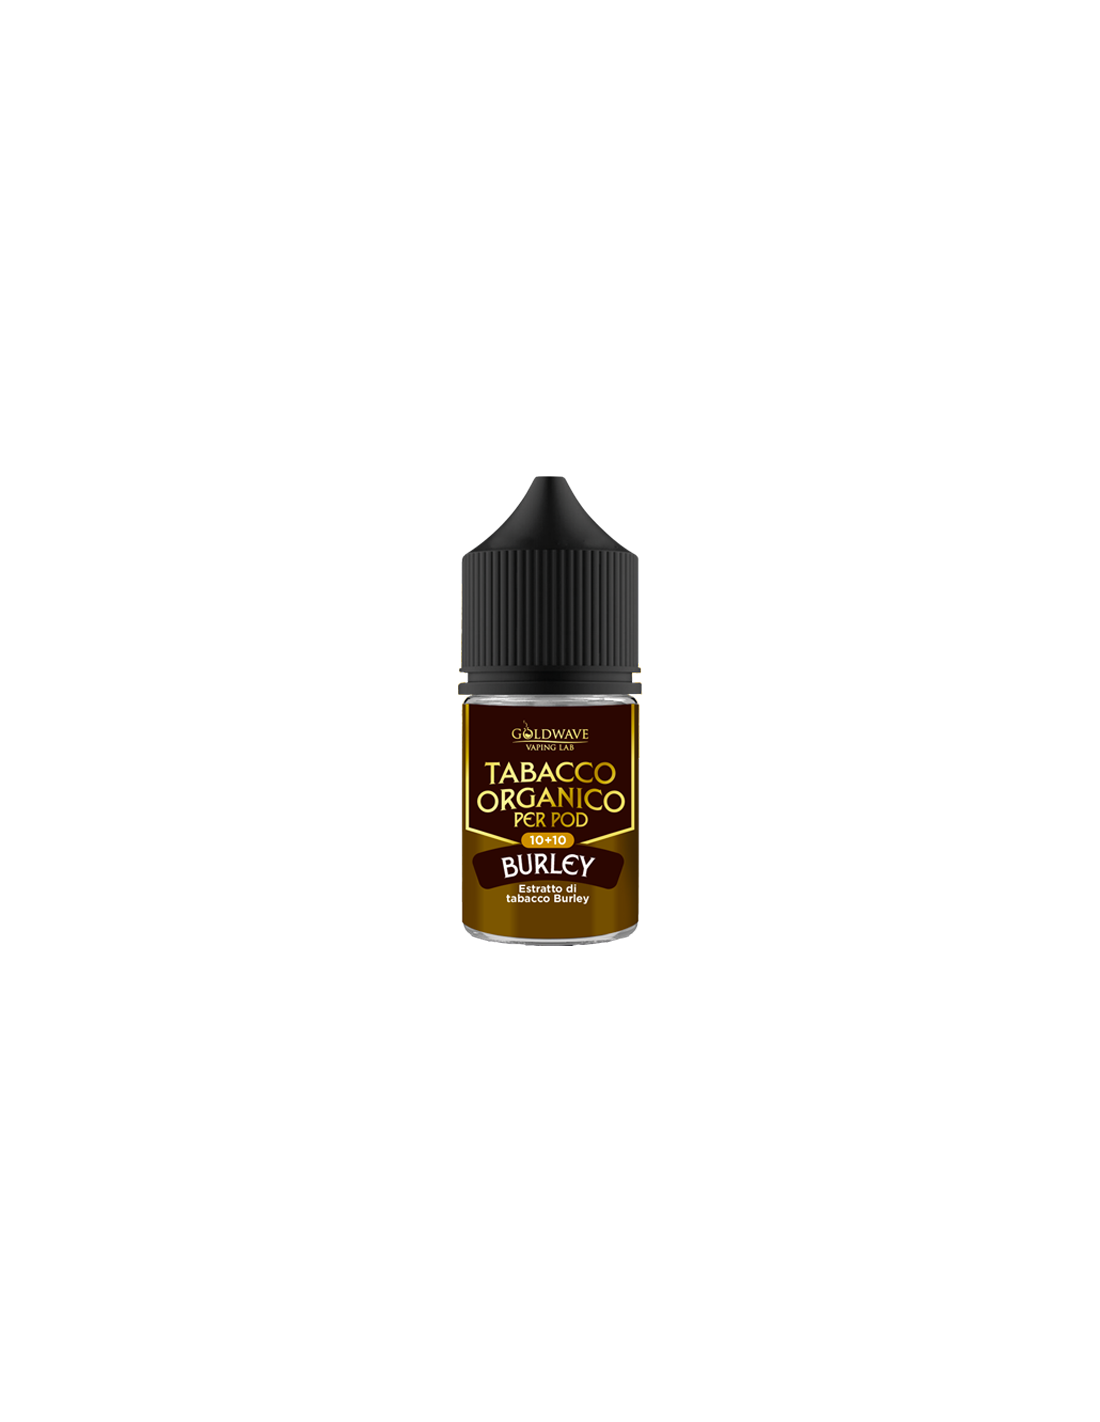 Goldwave Burley Tabacco Organico Per Pod Aroma Mini Shot 10ml